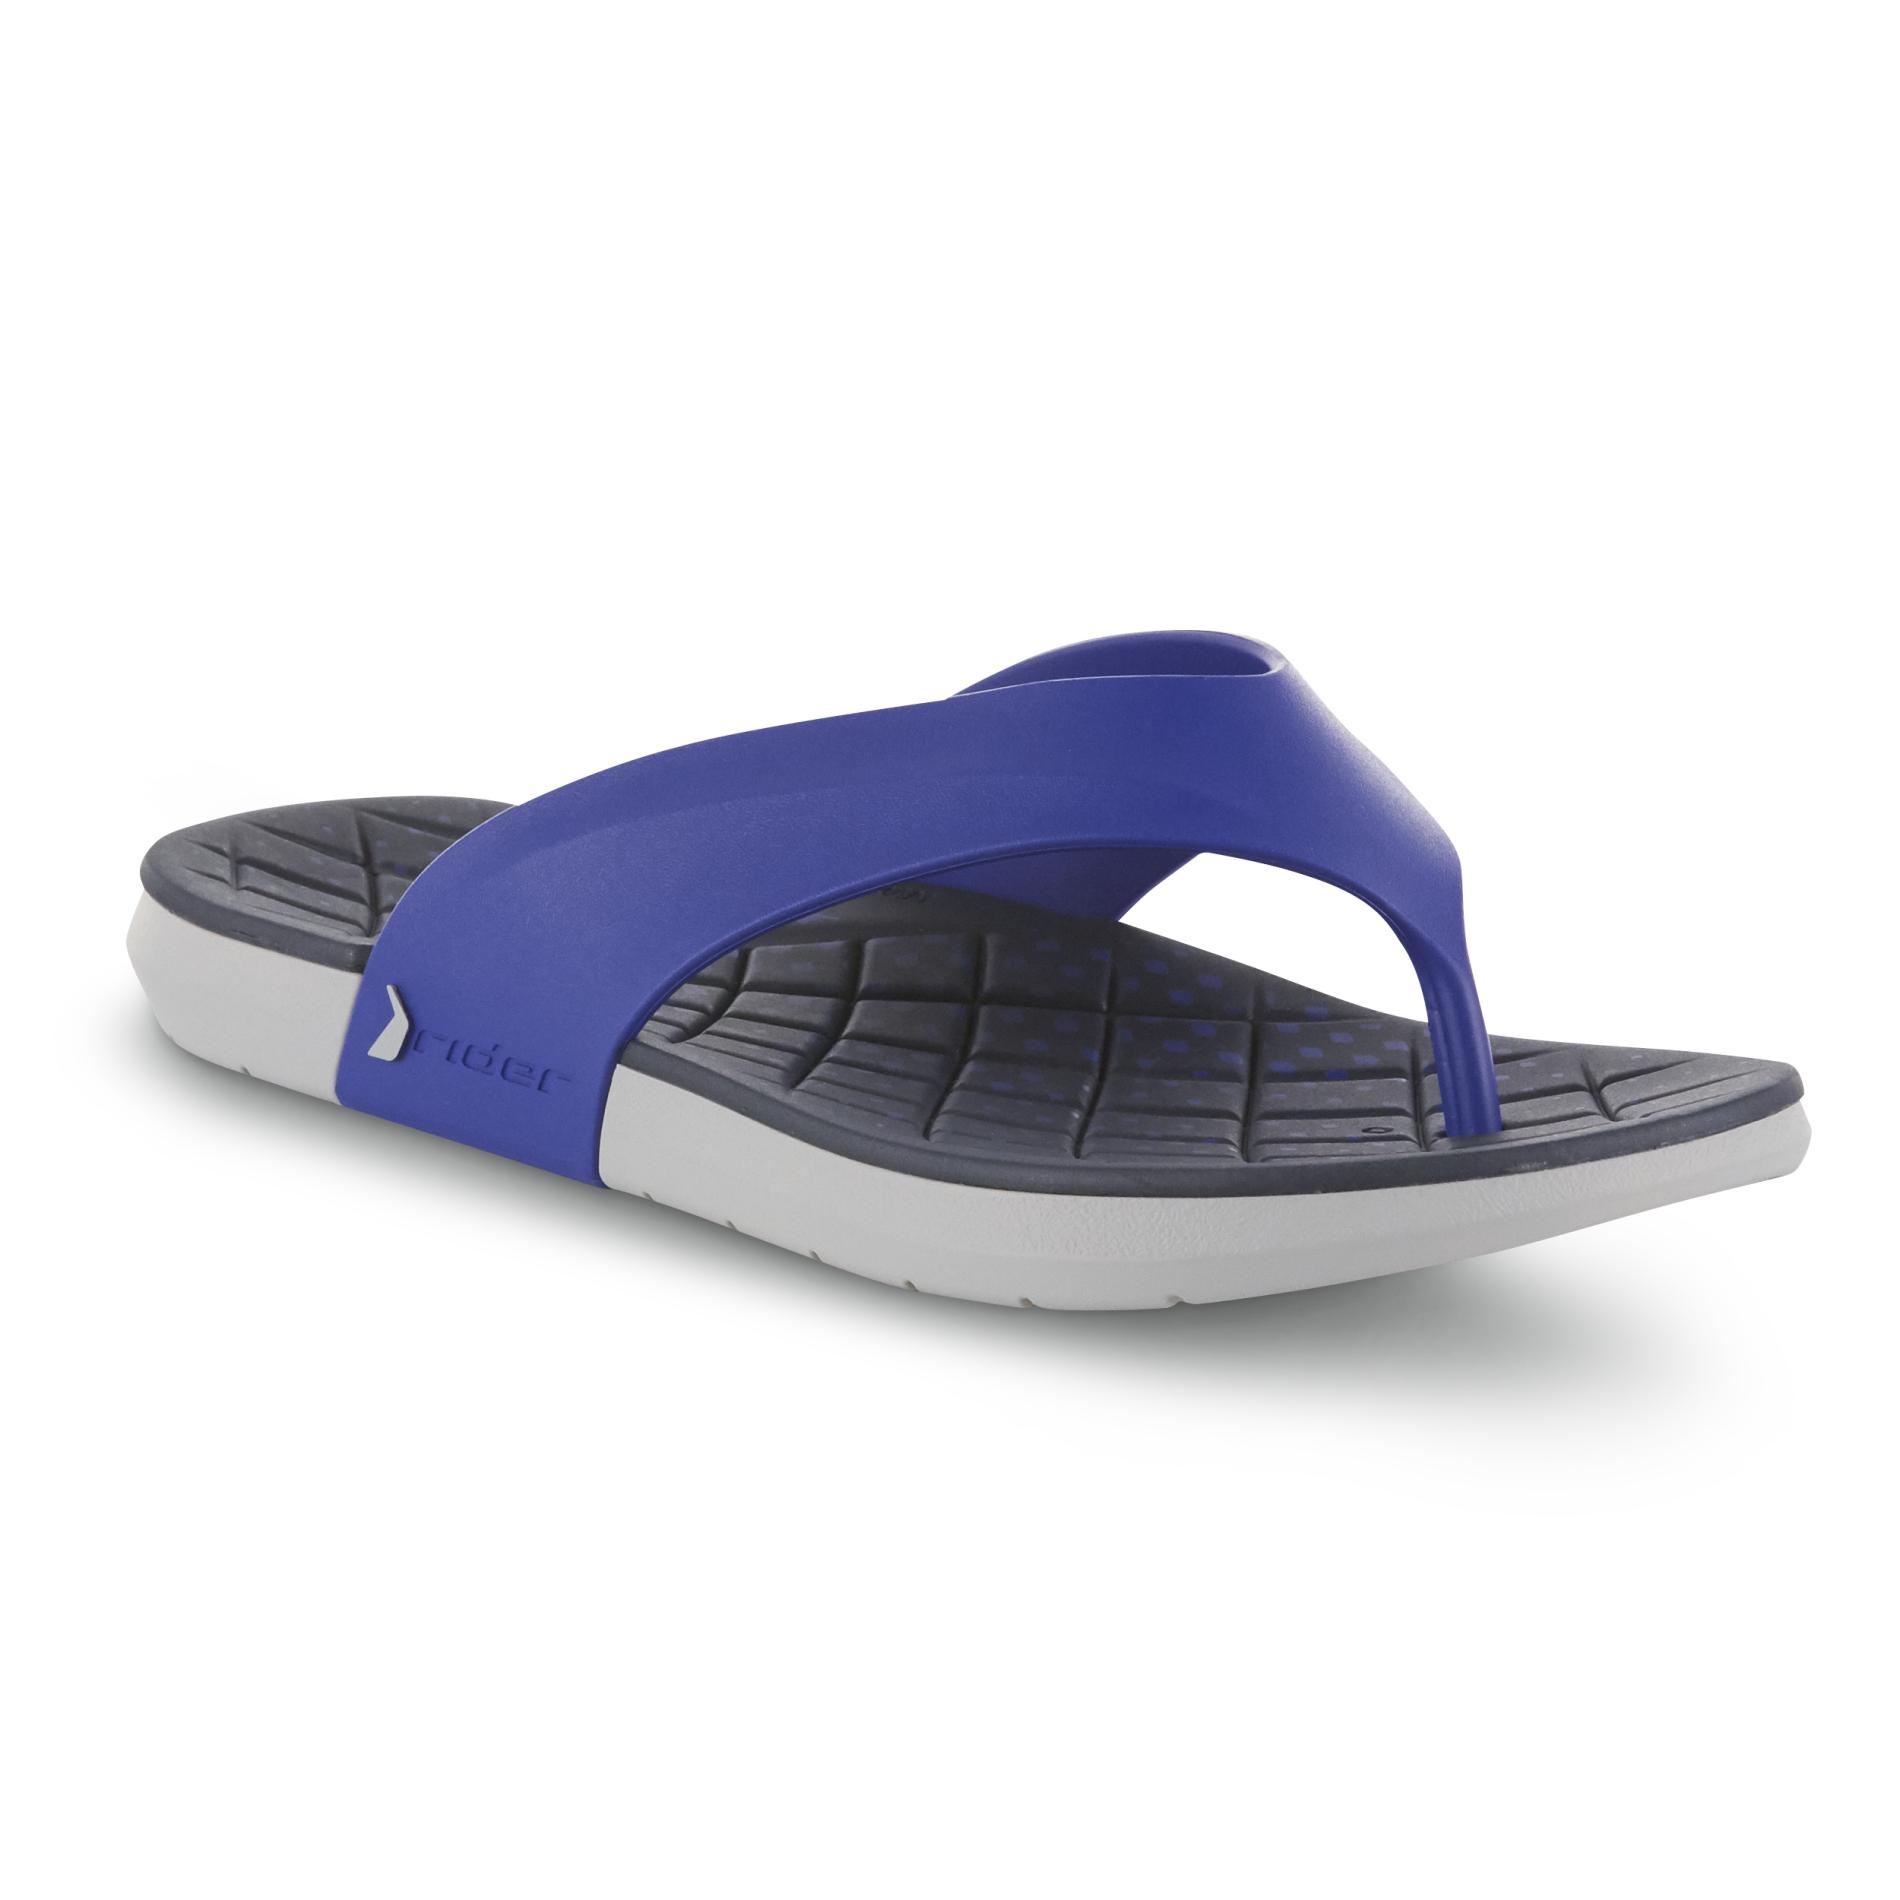 Rider Men's Infinity Flip-Flop Sandal - Blue/Gray